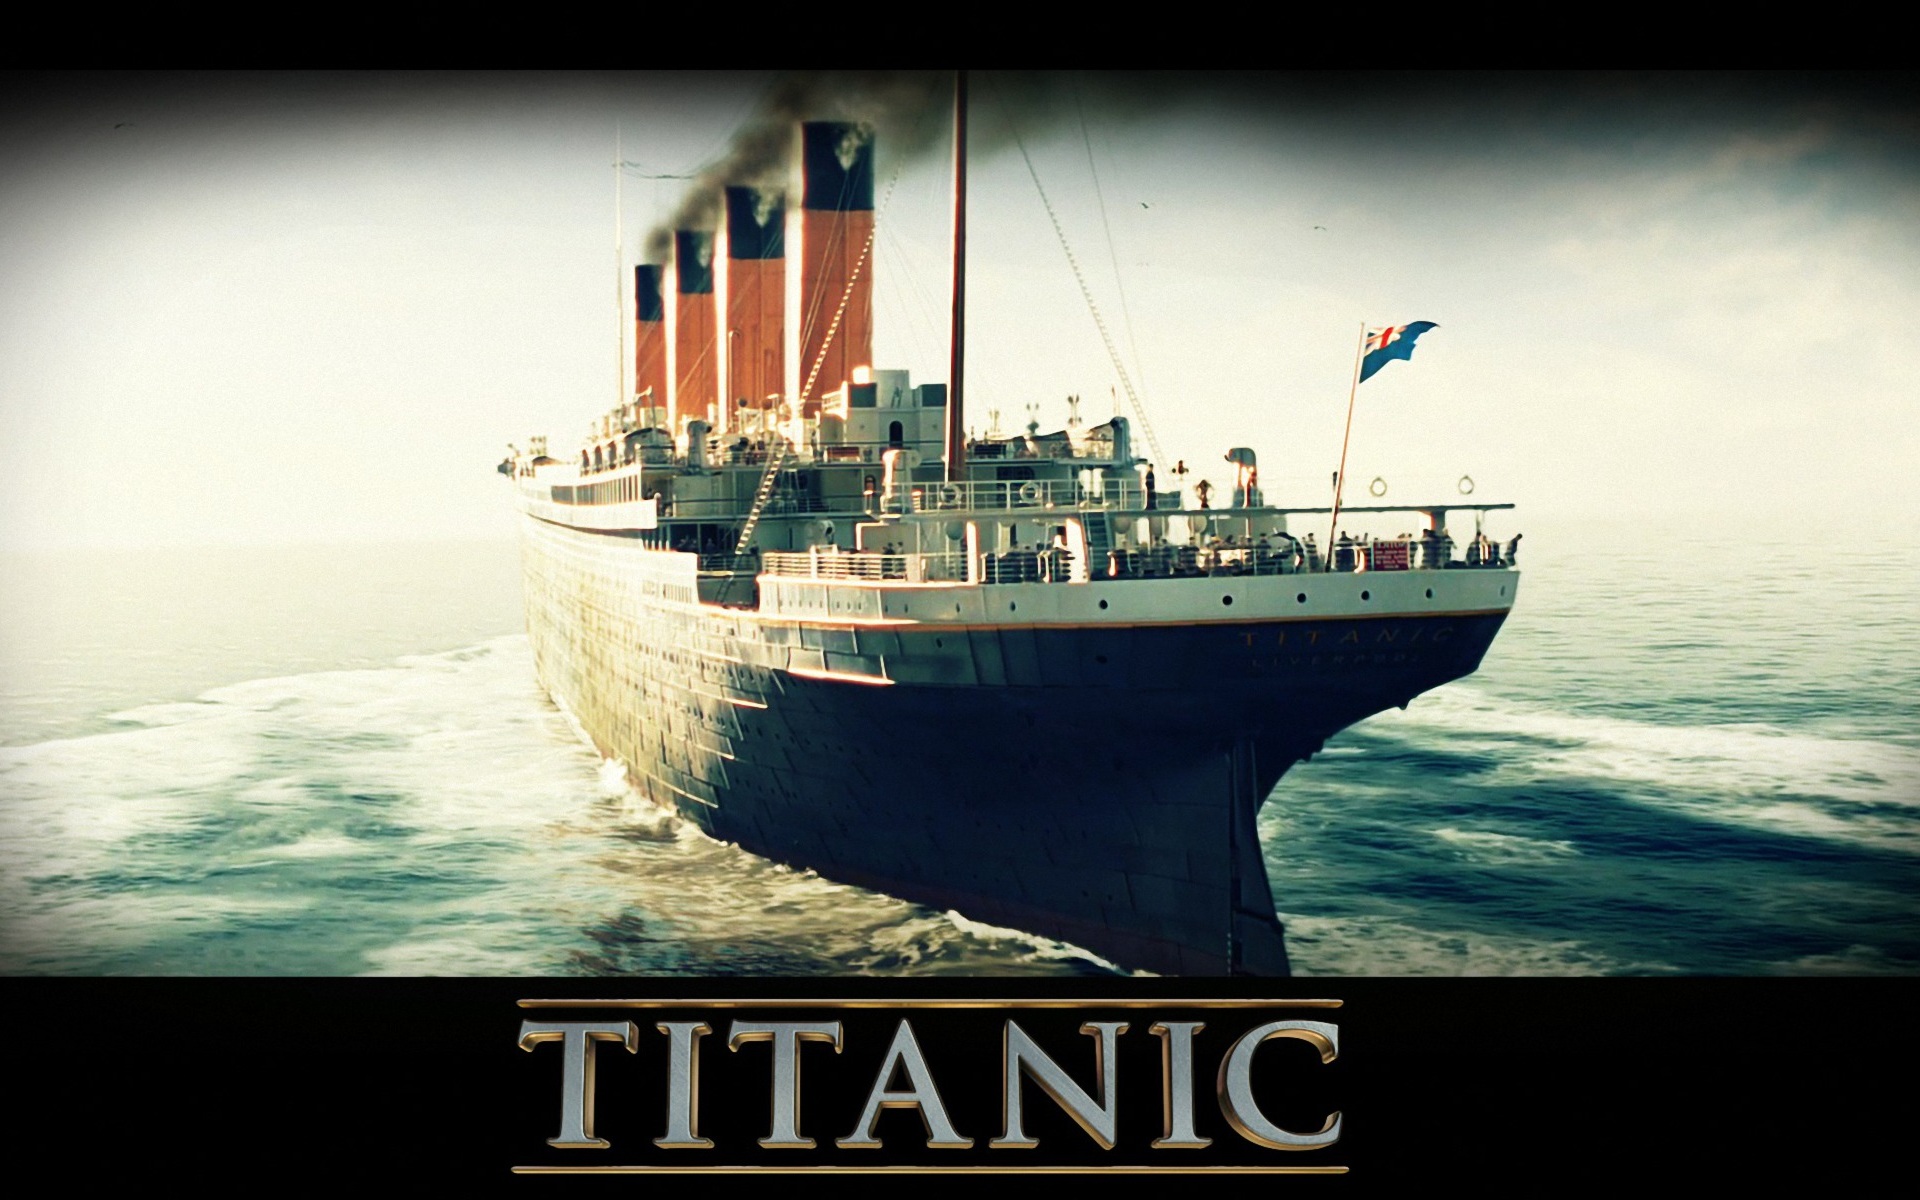 Titanic 3d Wallpaper Pictures